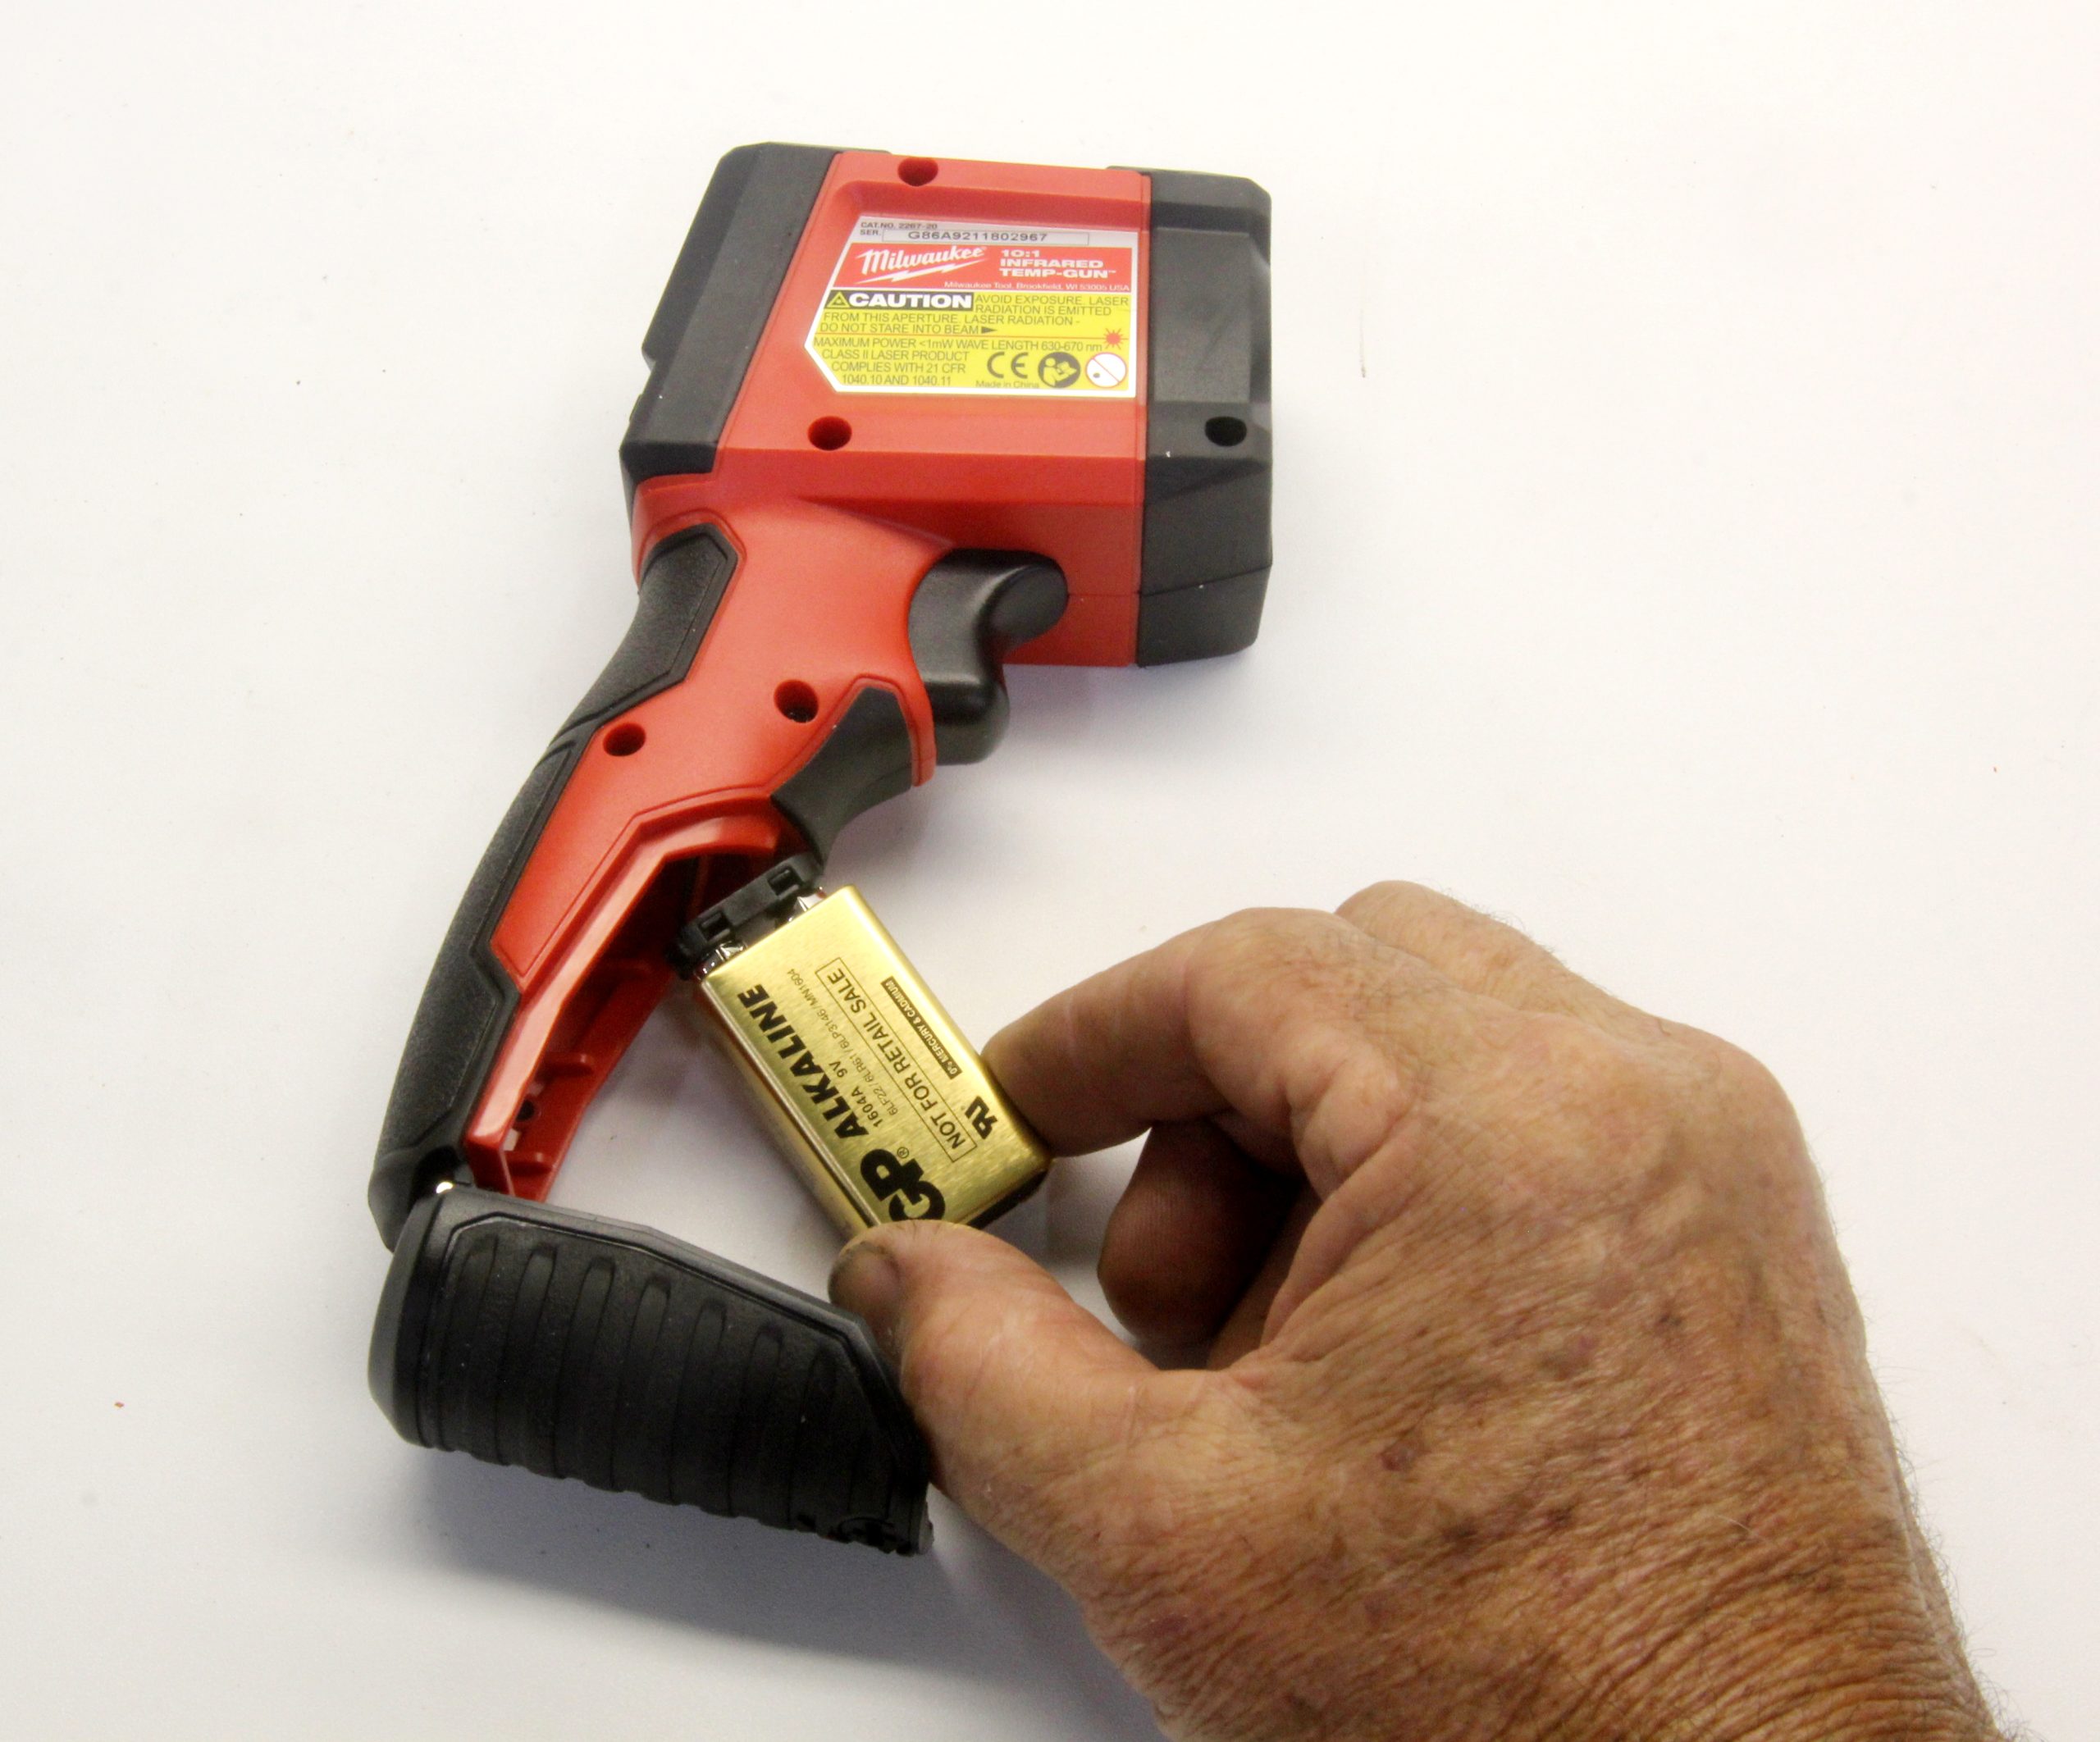 The Handheld Infrared Temp Gun: Dozens of Uses In & Around the Garage